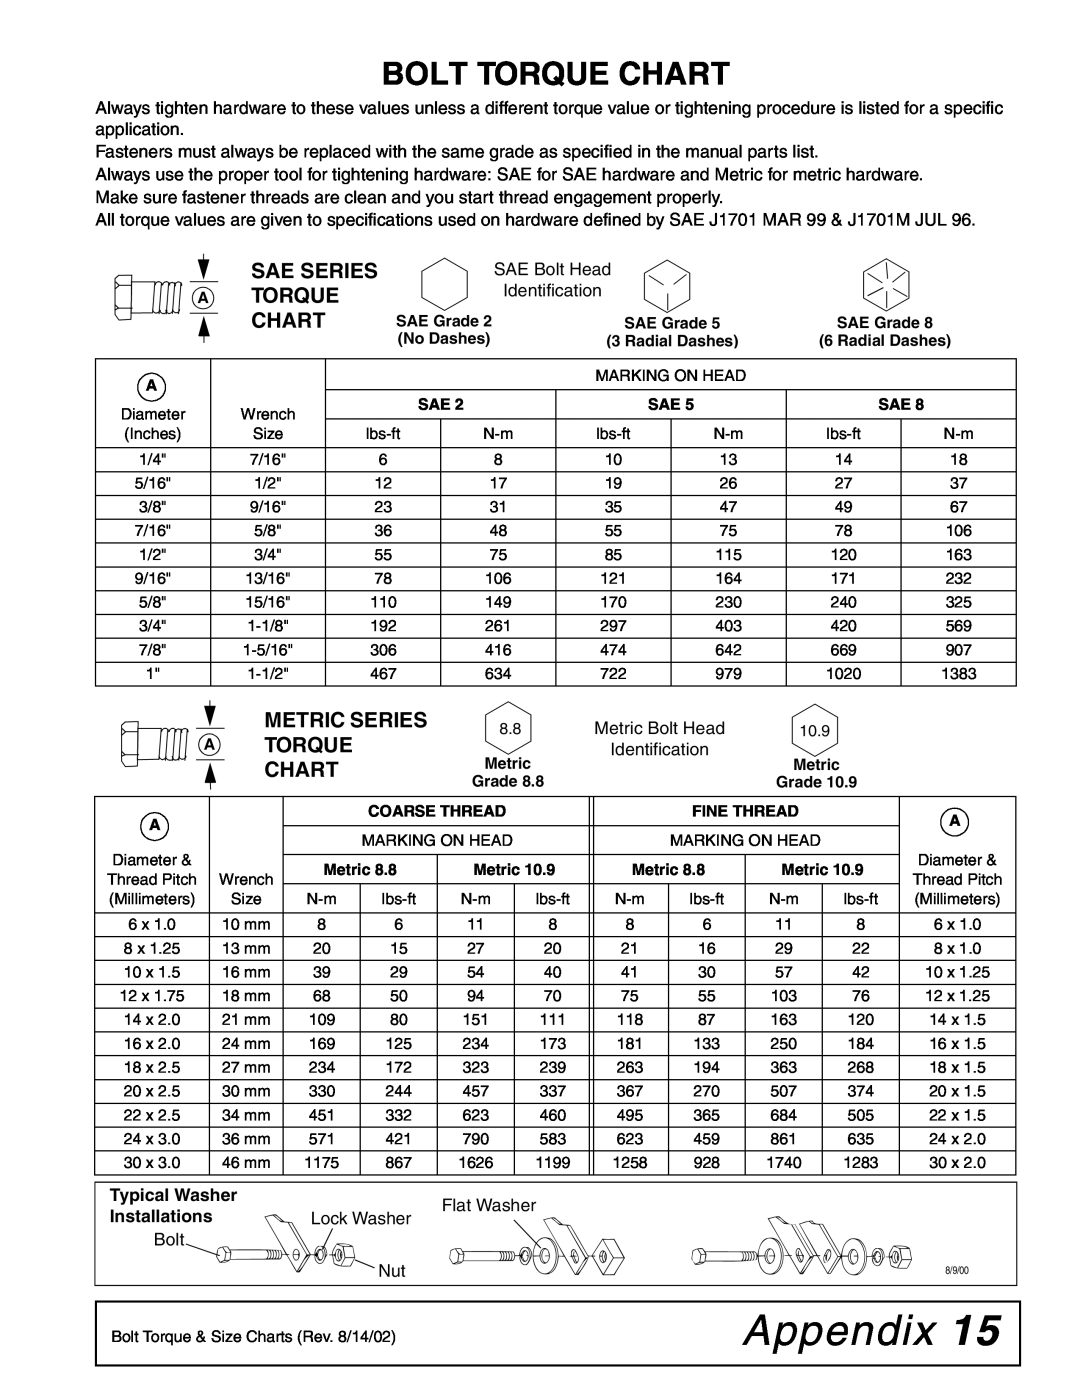 Woods Equipment 211822 installation manual Appendix, Bolt Torque Chart, Sae Series A Torque Chart, Metric Series 